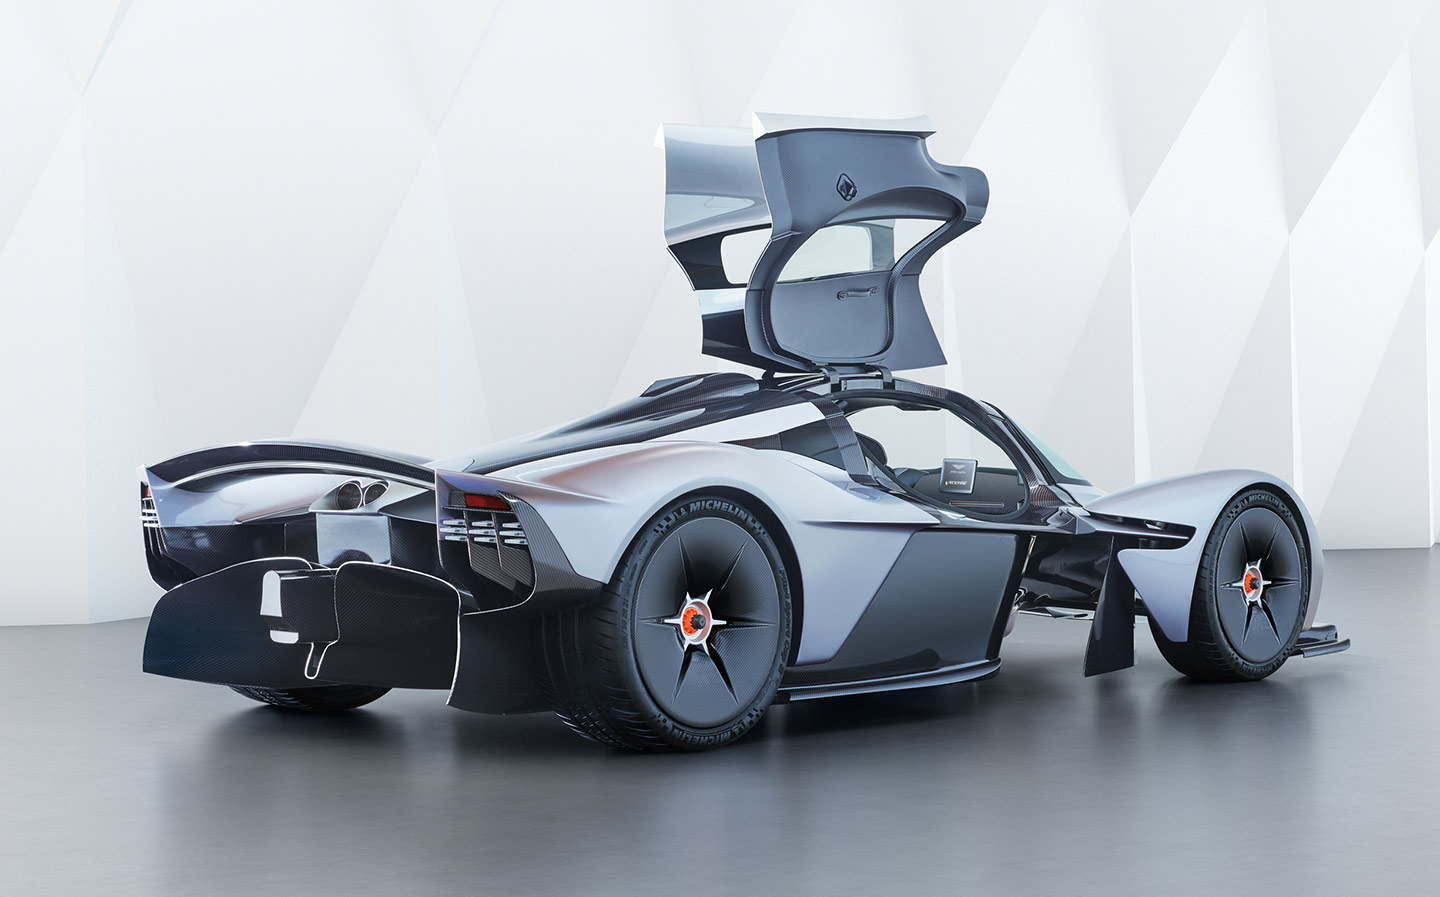 Ultra-fast F1-inspired Aston Martin Valkyrie hypercar photos revealed